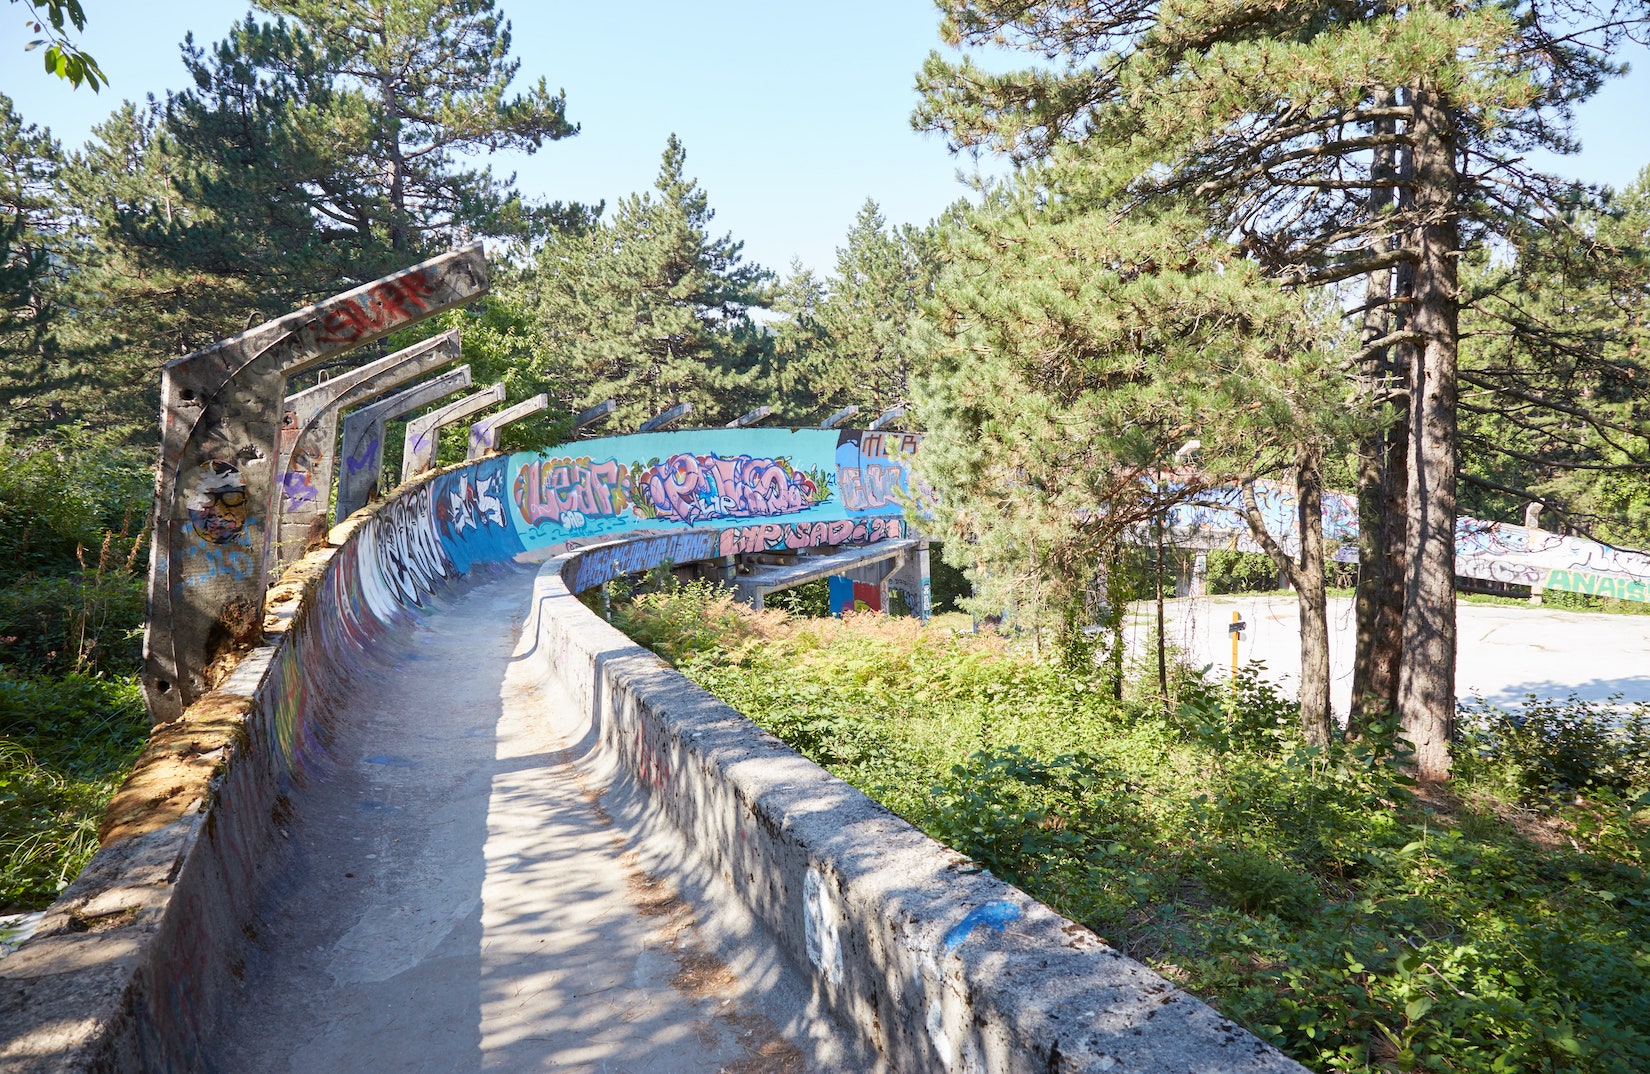 Visiting Sarajevo's Abandoned Bobsled Track